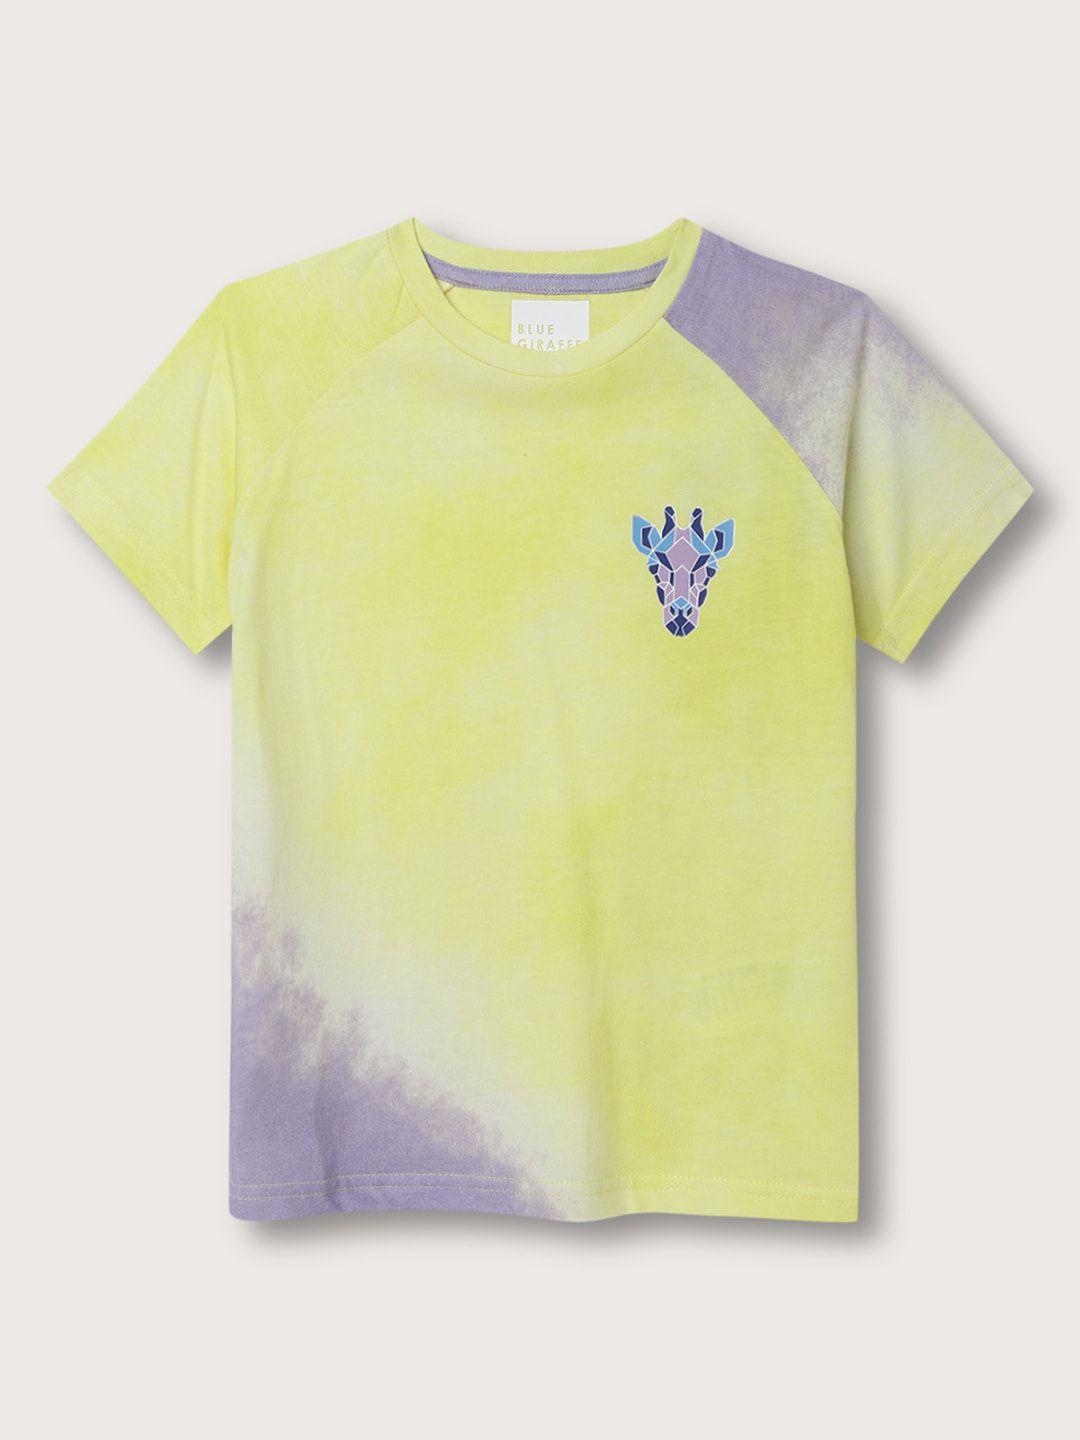 blue giraffe boys yellow v-neck pockets t-shirt